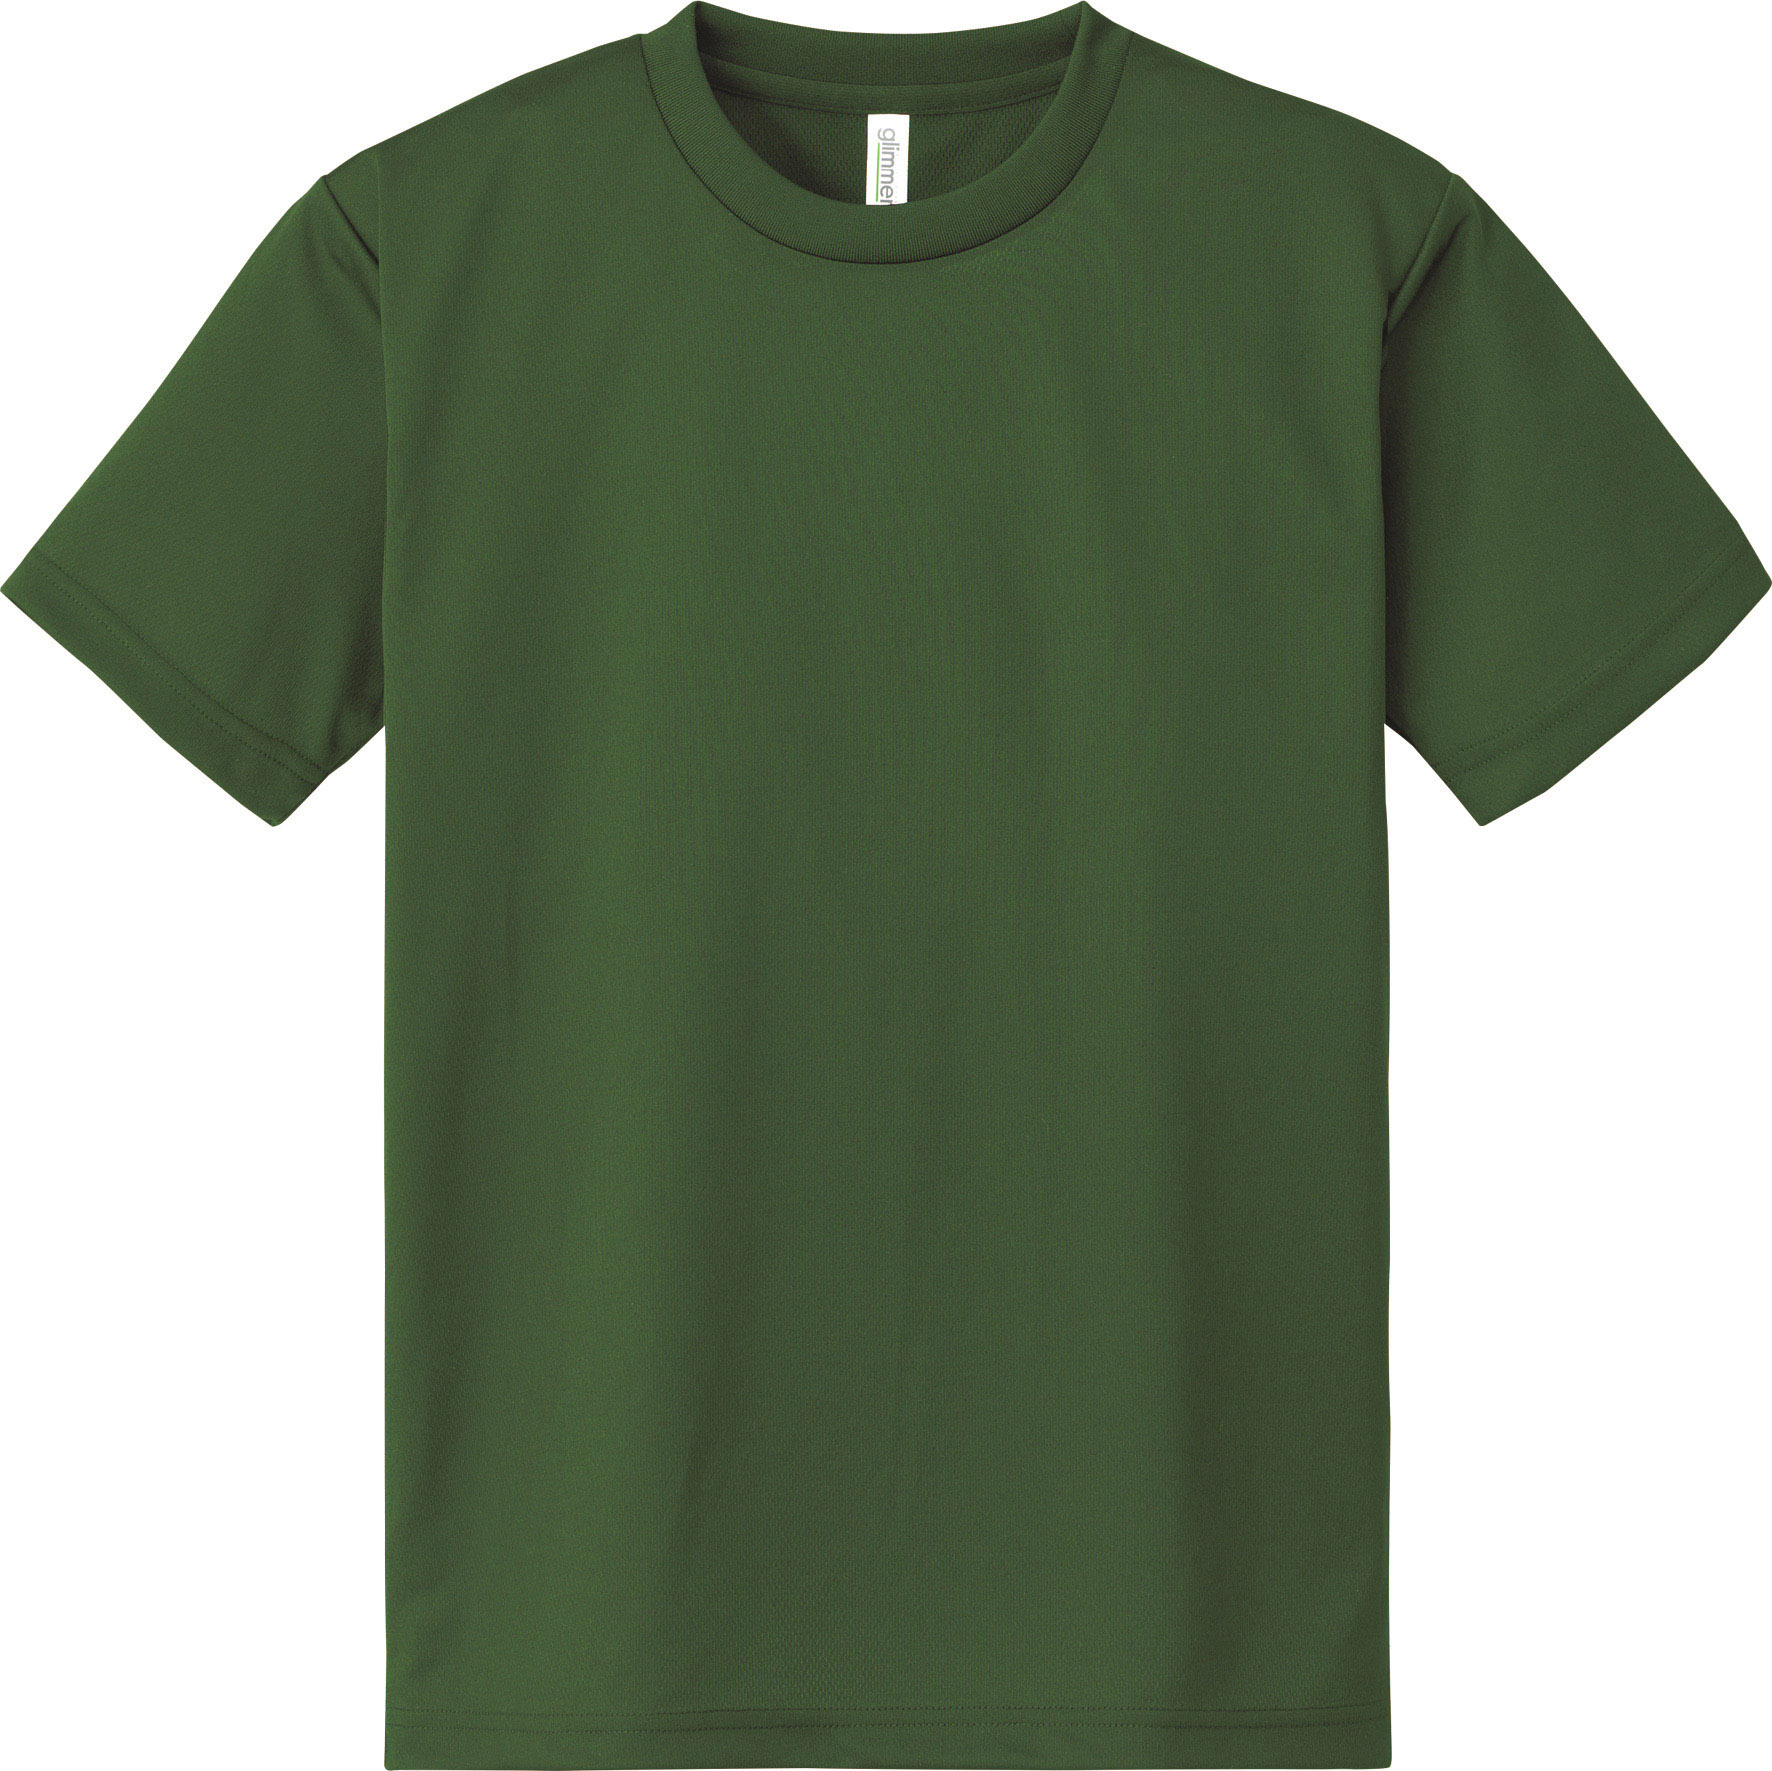 Act 4 4オンス ドライtシャツ 福岡 オリジナルtシャツプリント制作 刺繍ワッペン アパレルデザイン 無地tシャツ ショップのアートシャツファクトリー